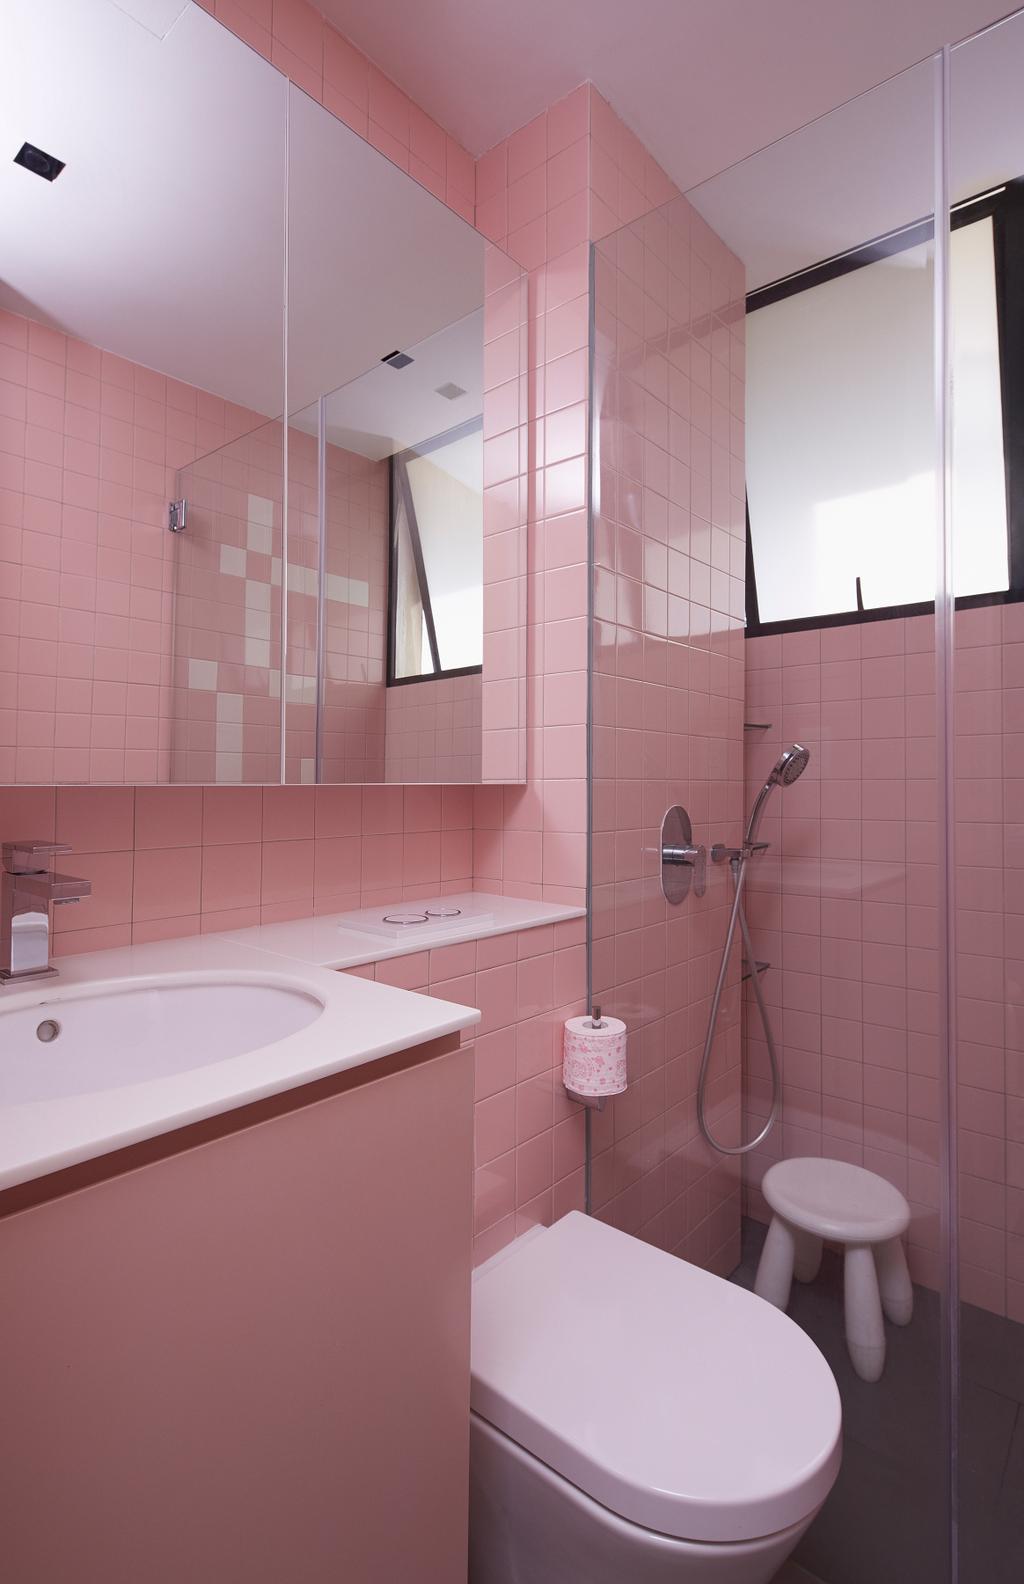 Modern, Condo, Bathroom, Spanish Village, Architect, PROVOLK ARCHITECTS, Pink, Pink Tiles, Pink And White, Vanity, Sink, Kids Bathroom, Girls, Indoors, Interior Design, Room